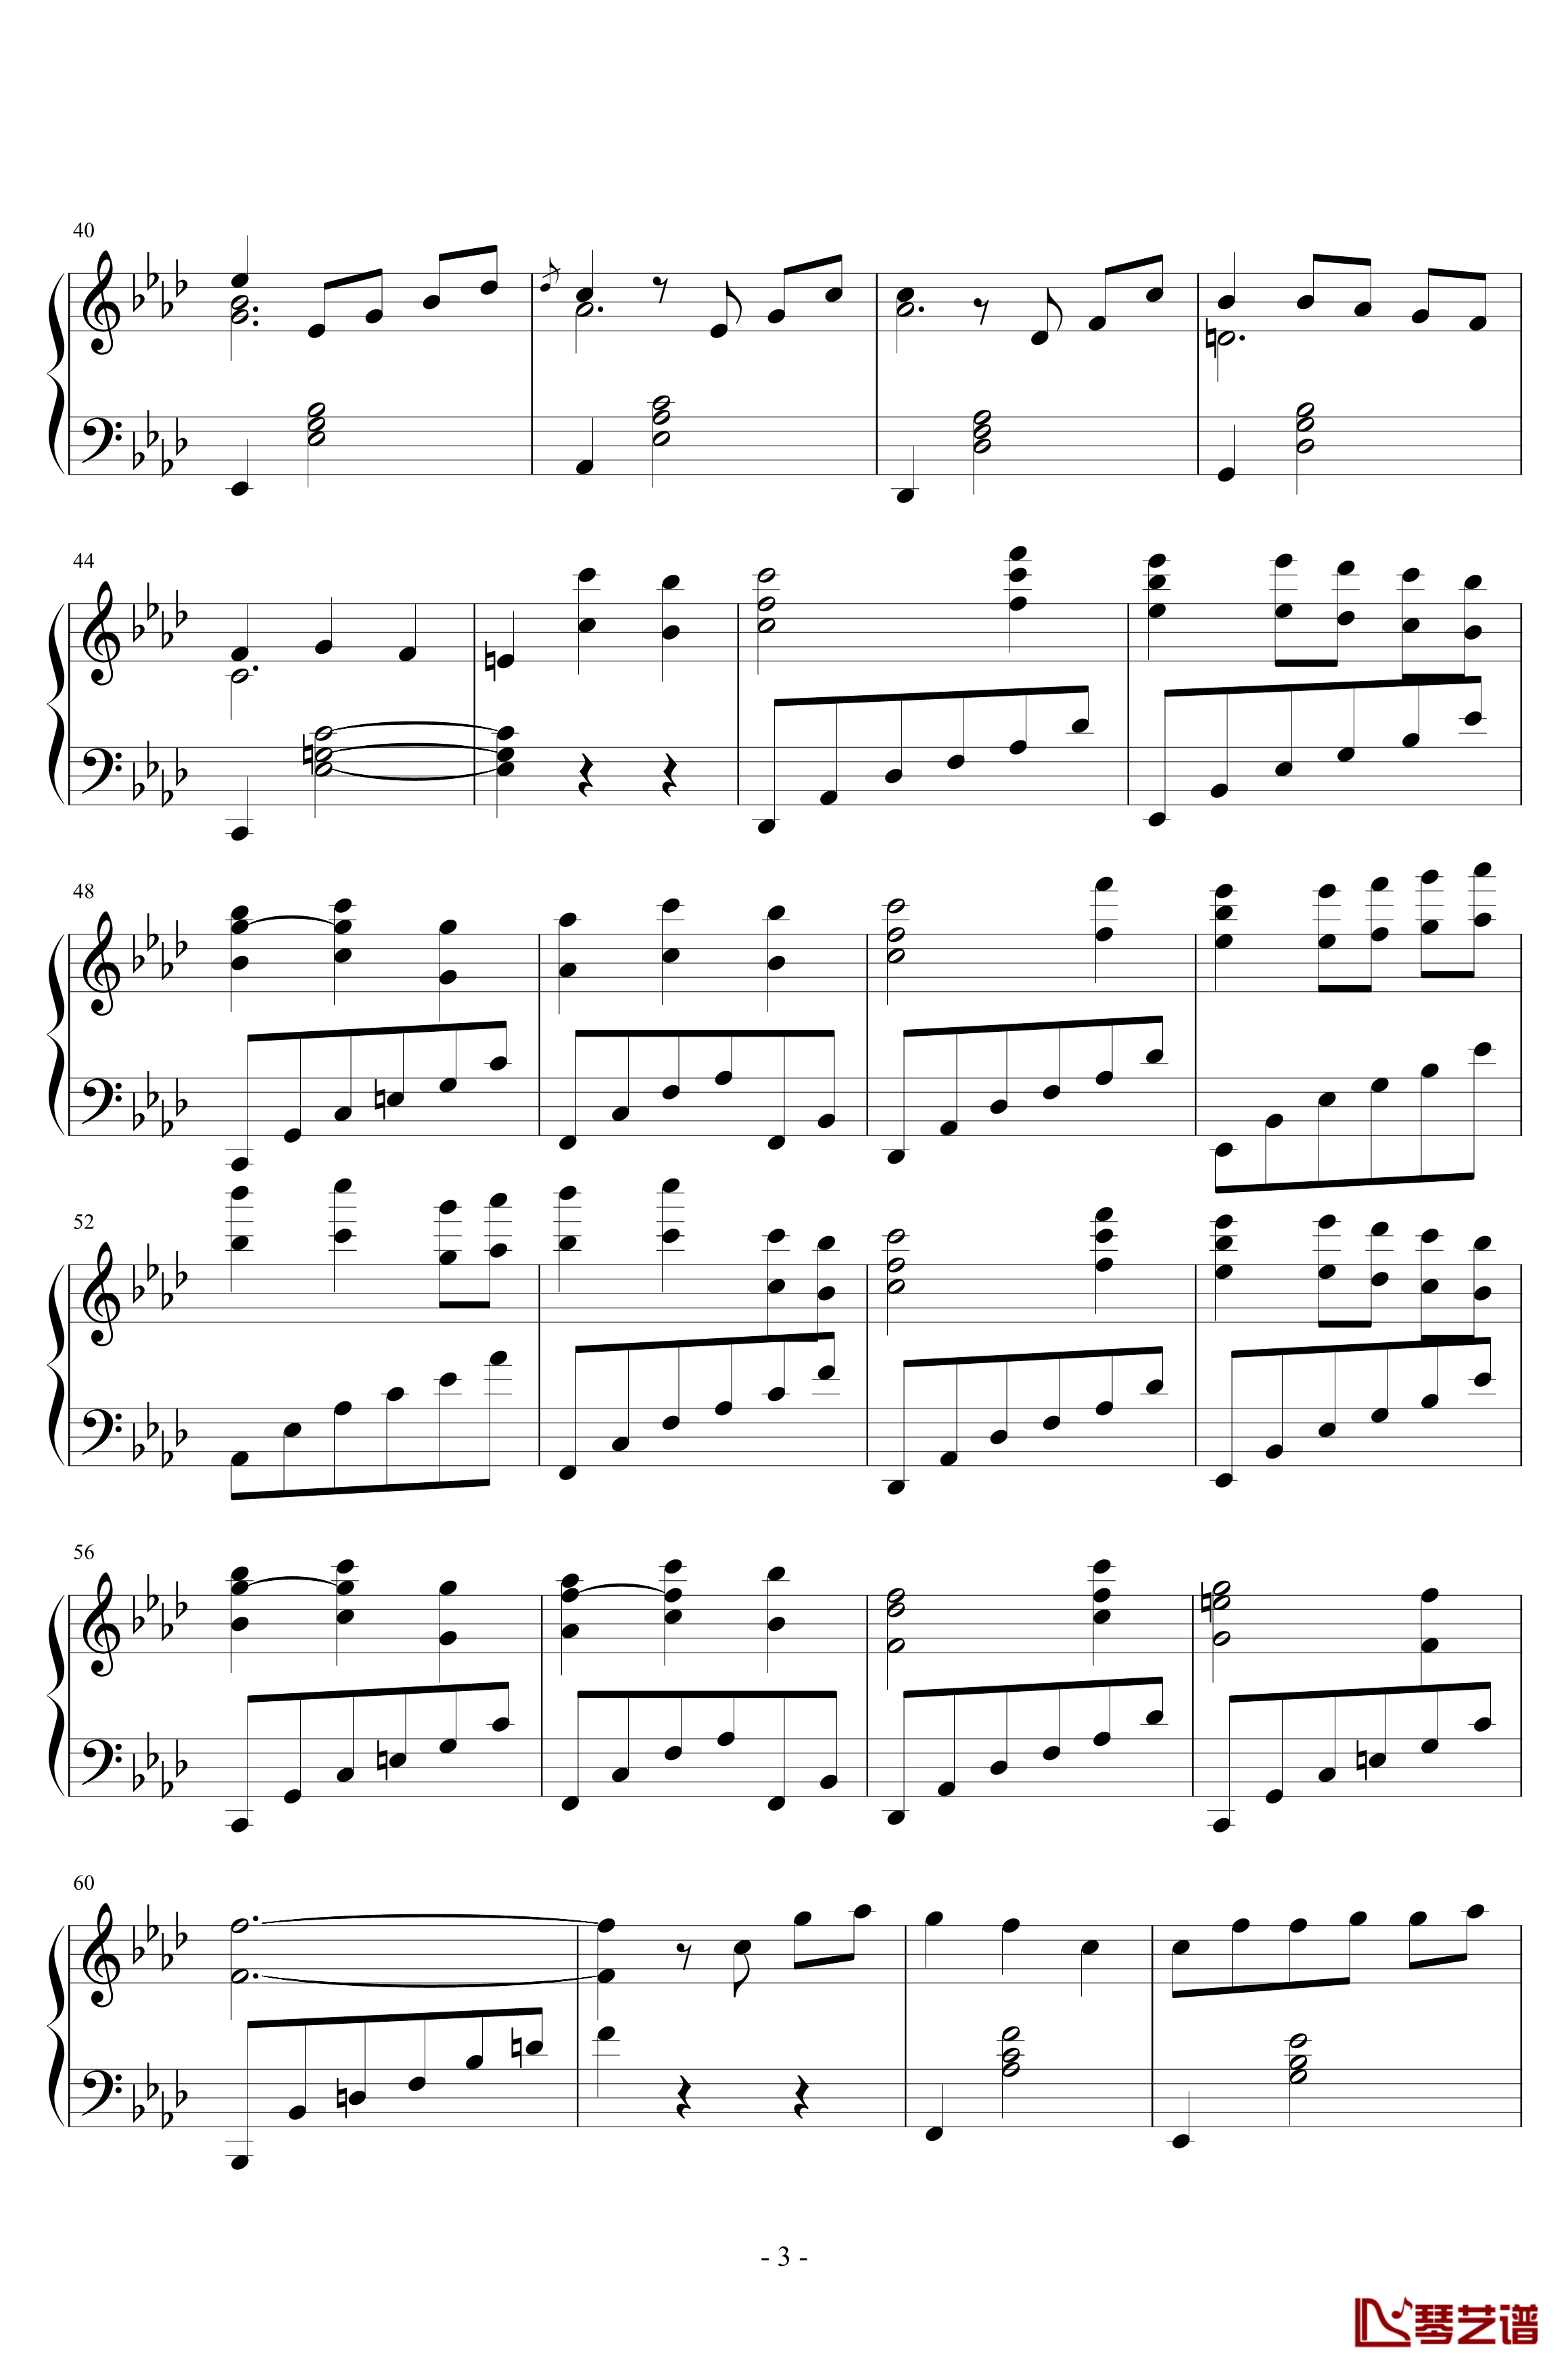 Op.1钢琴谱-加藤真弓